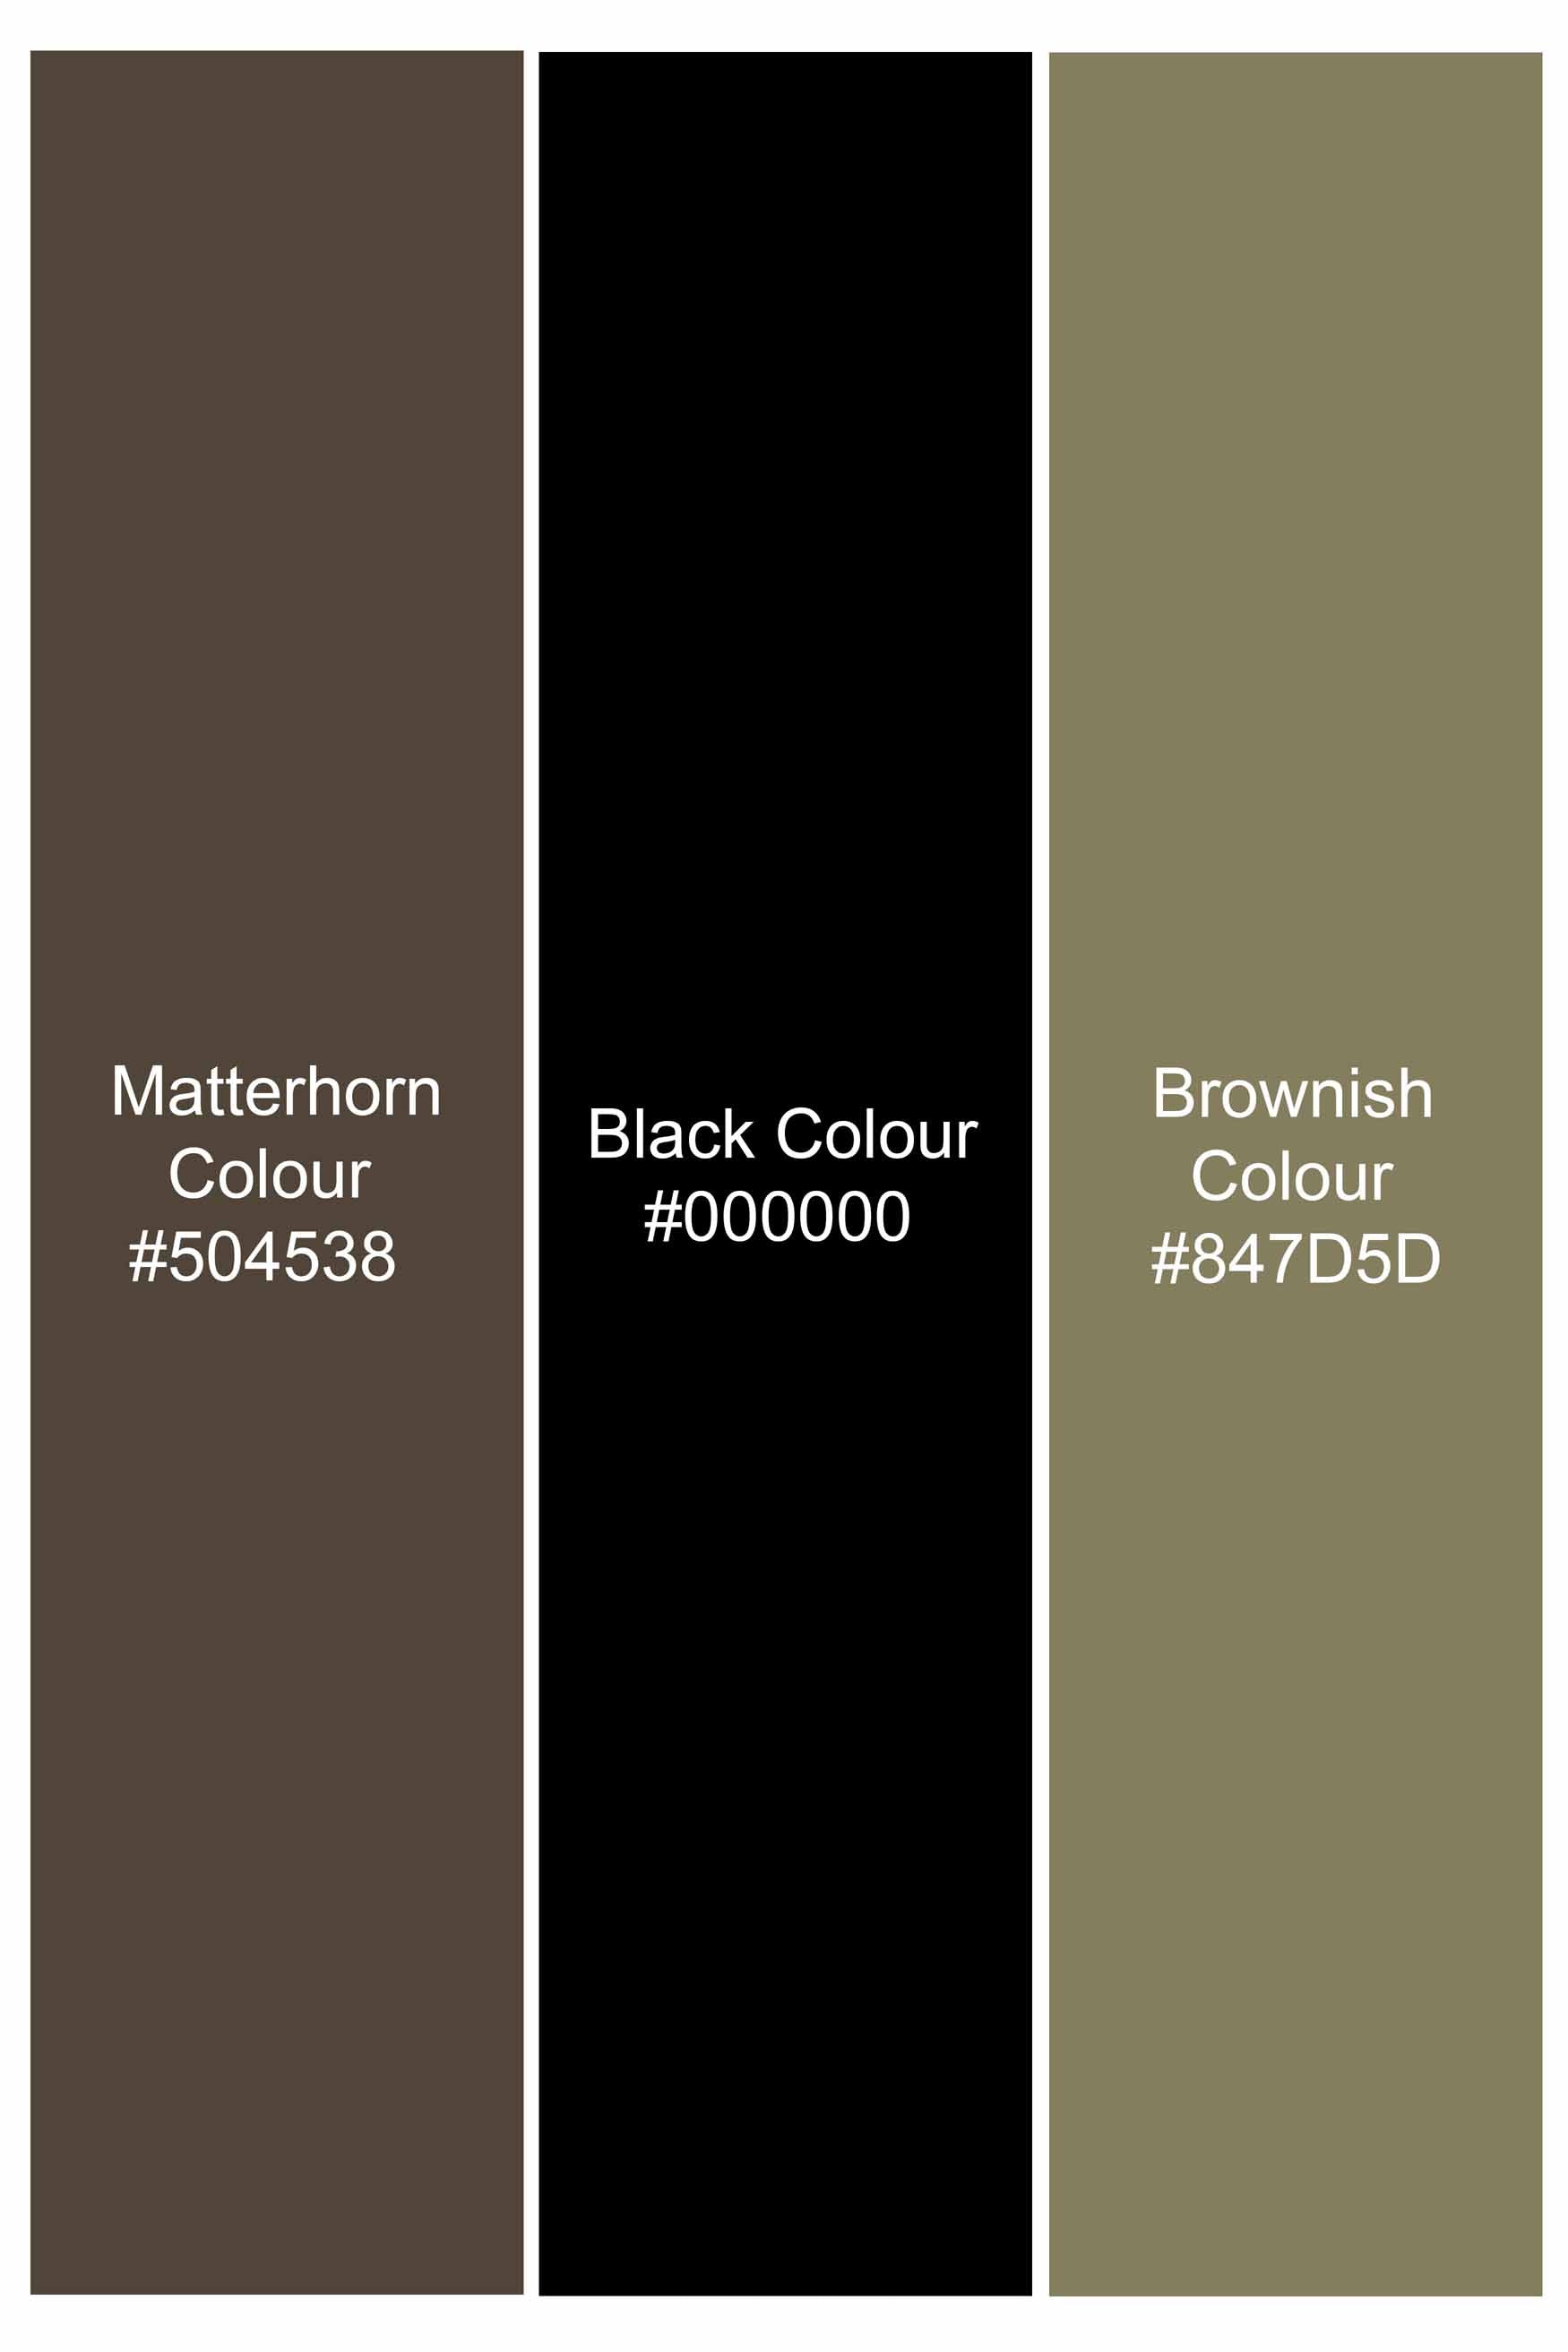 Matterhorn Brown with Black and Brownish Royal Oxford Shirt